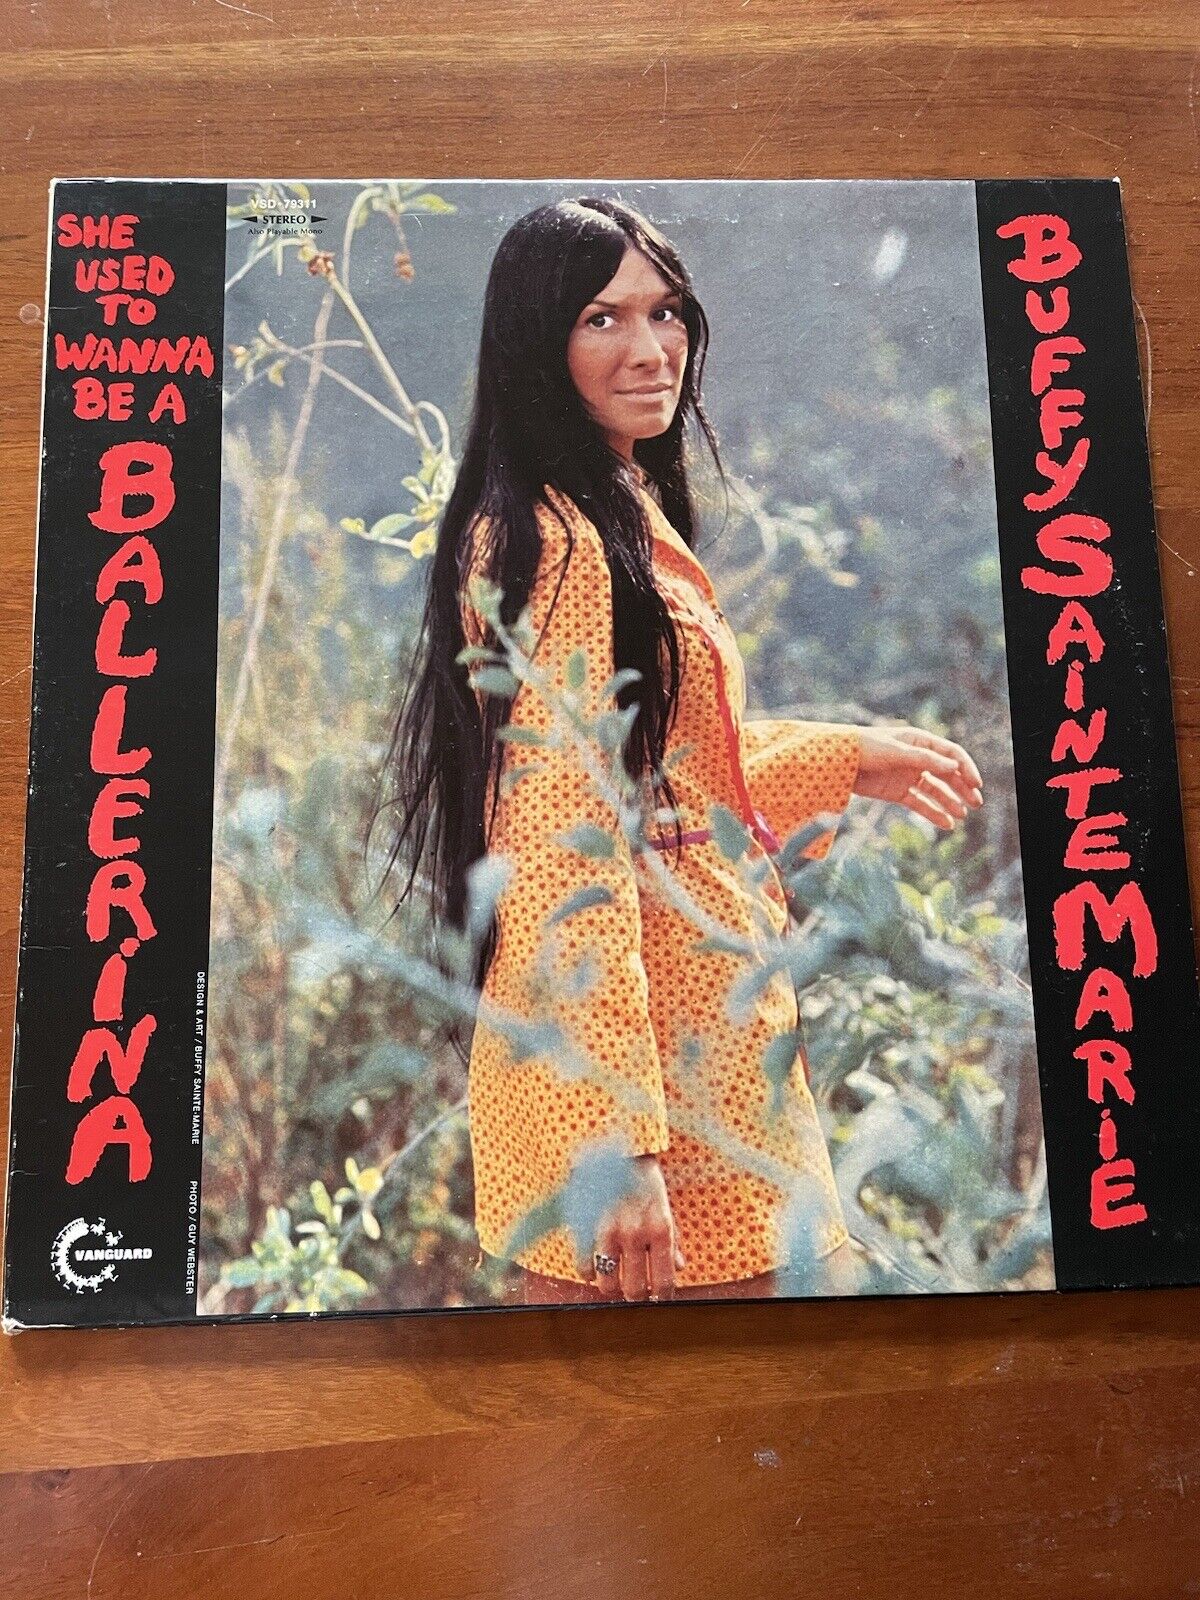 BUFFY SAINTE MARIE She Used To Wanna Be A Ballerina LP Vintage Vinyl 1971 VG+